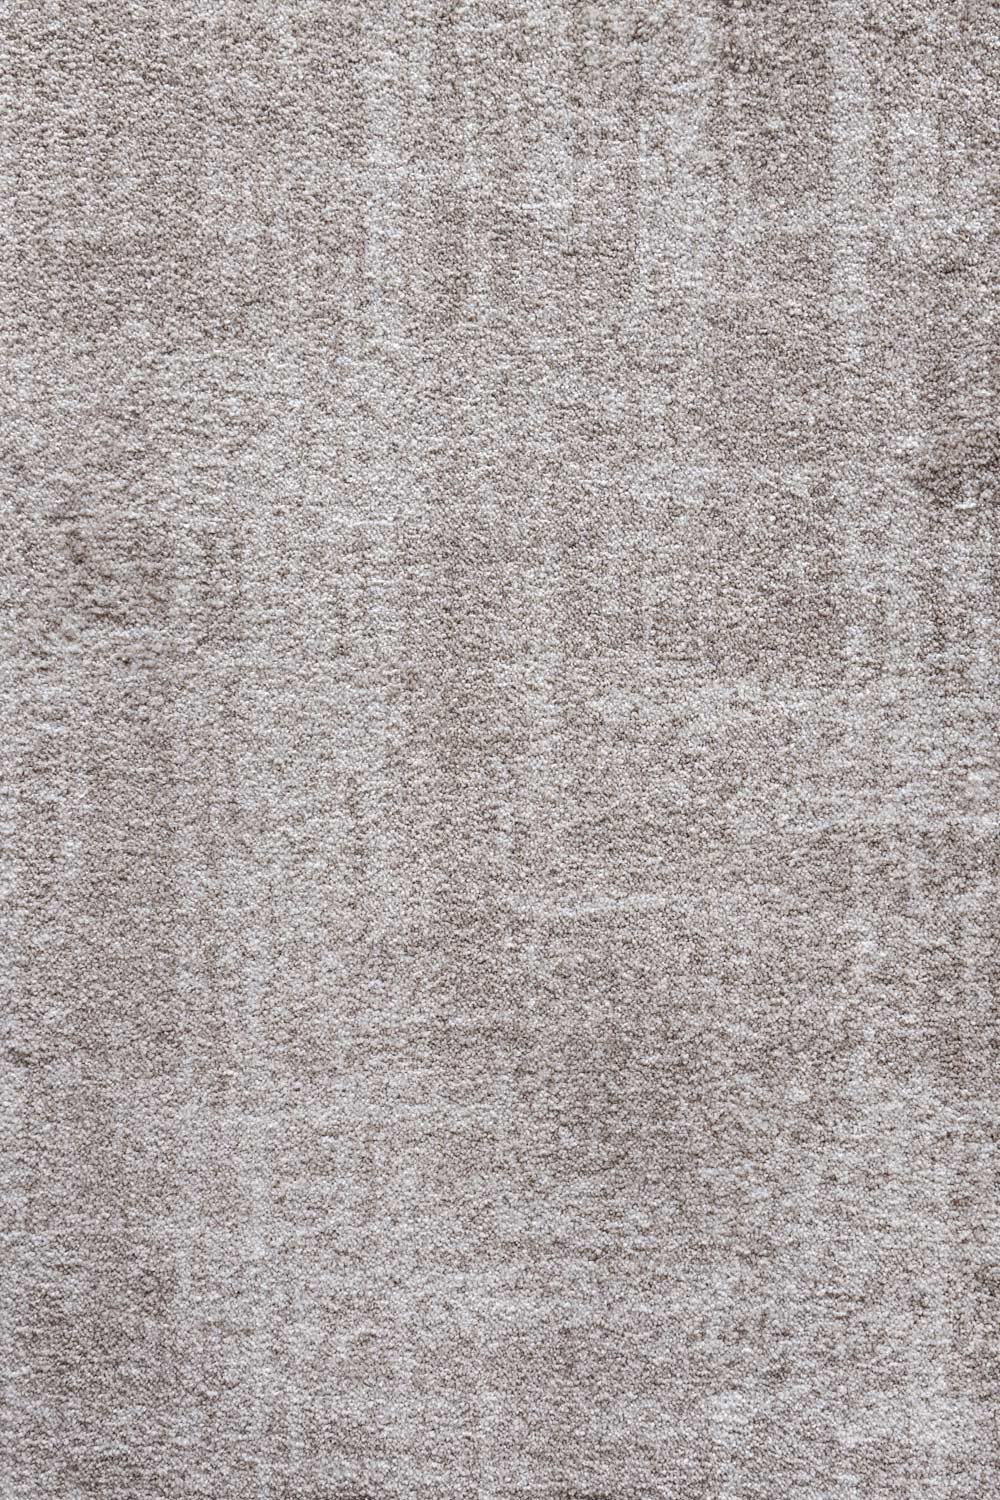 Metrážový koberec Mesh 39 400 cm